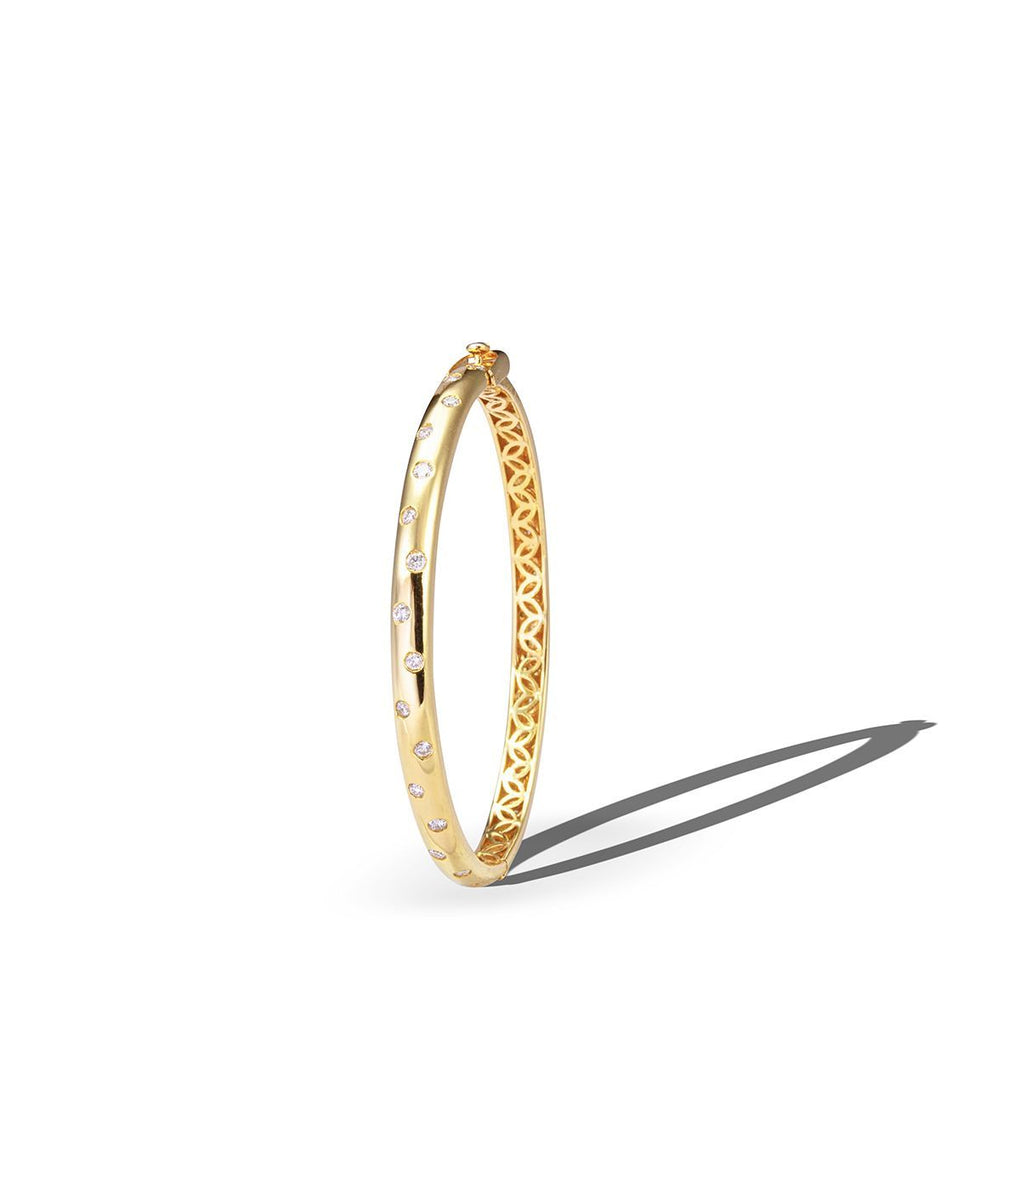 Buy 22k Gold Bangle Bracelet Indian Gold Jewelry Online in India - Etsy |  22k gold bangles, Online gold jewellery, Gold jewelry sets